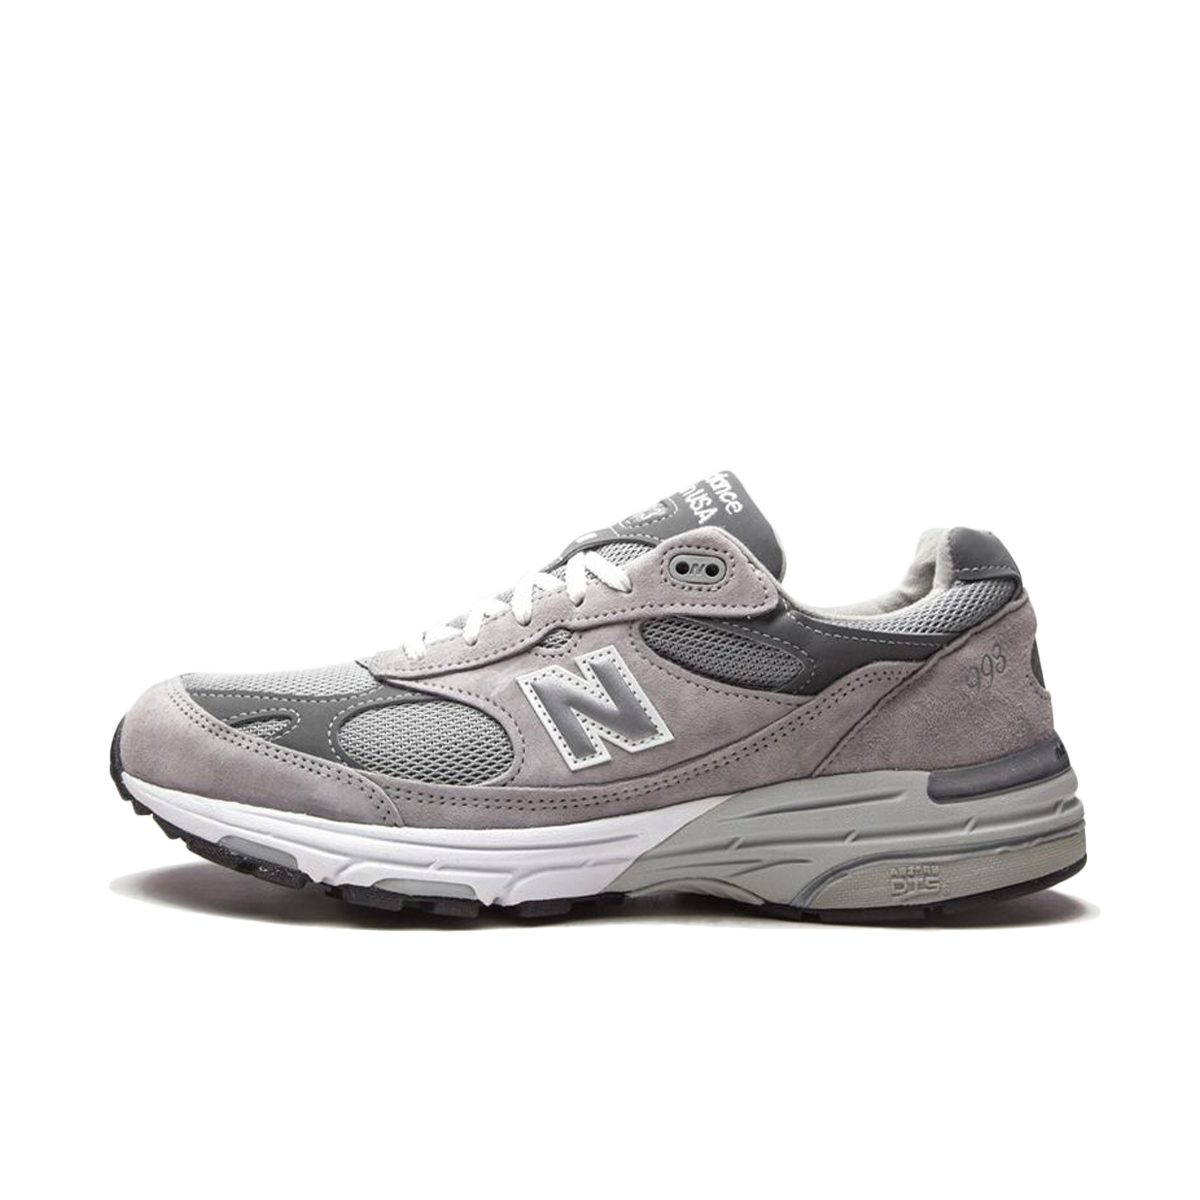 New Balance 993 "Grey'